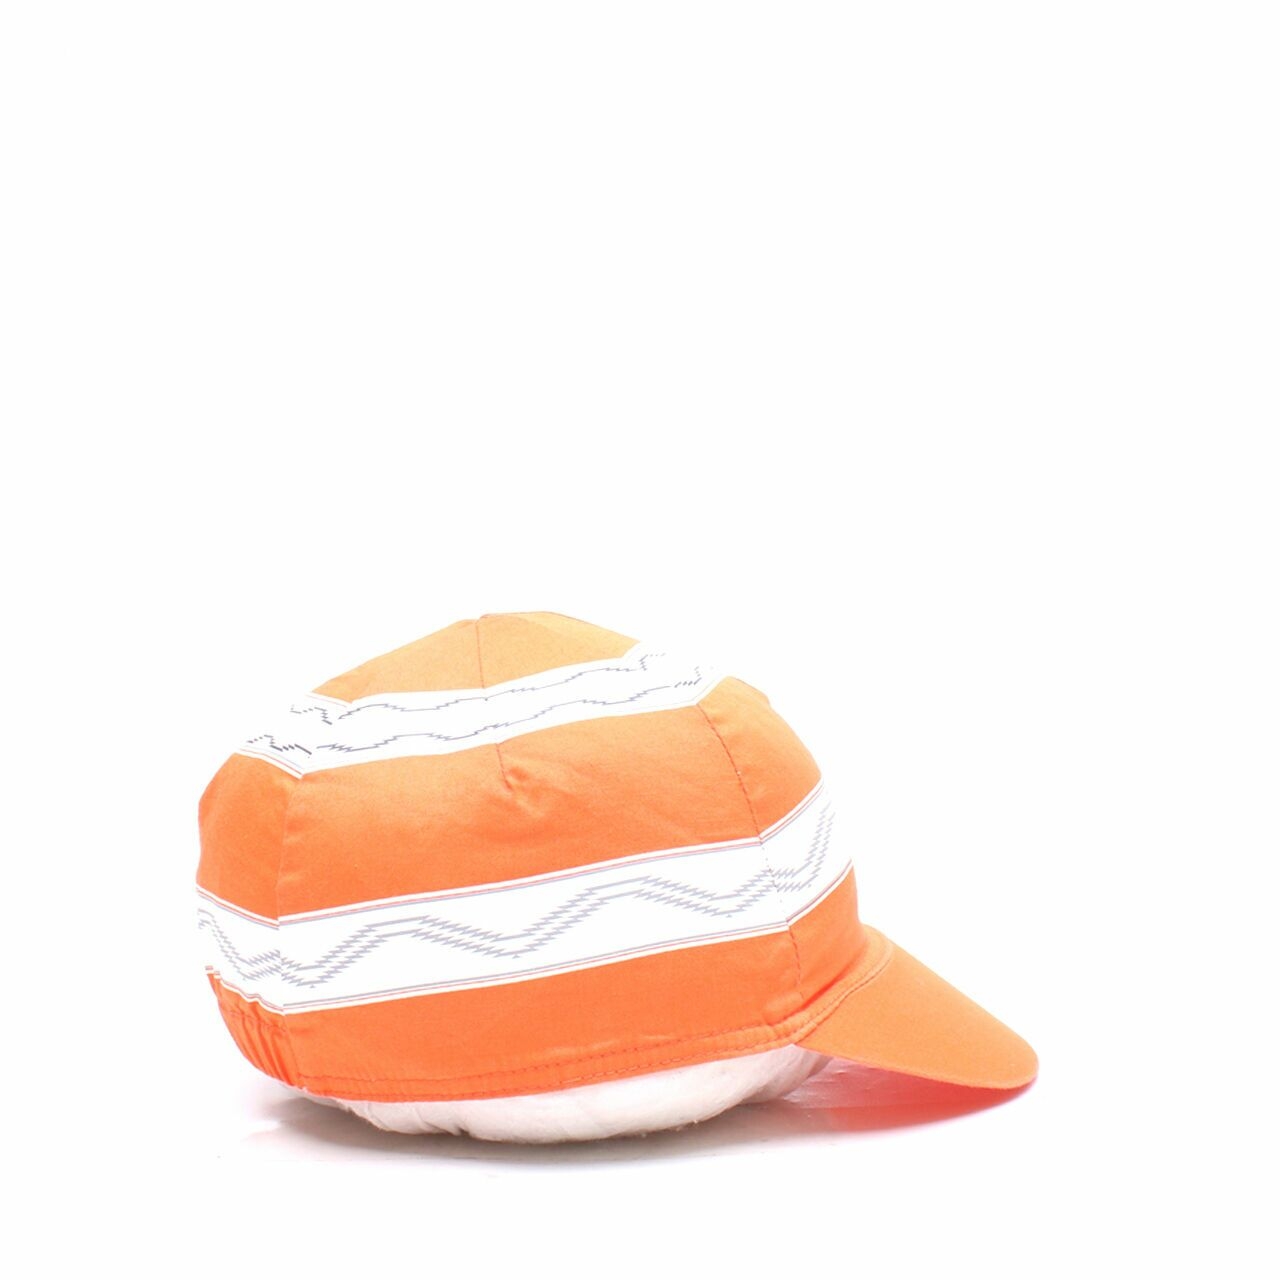 Pas Normal Studios Orange Hats